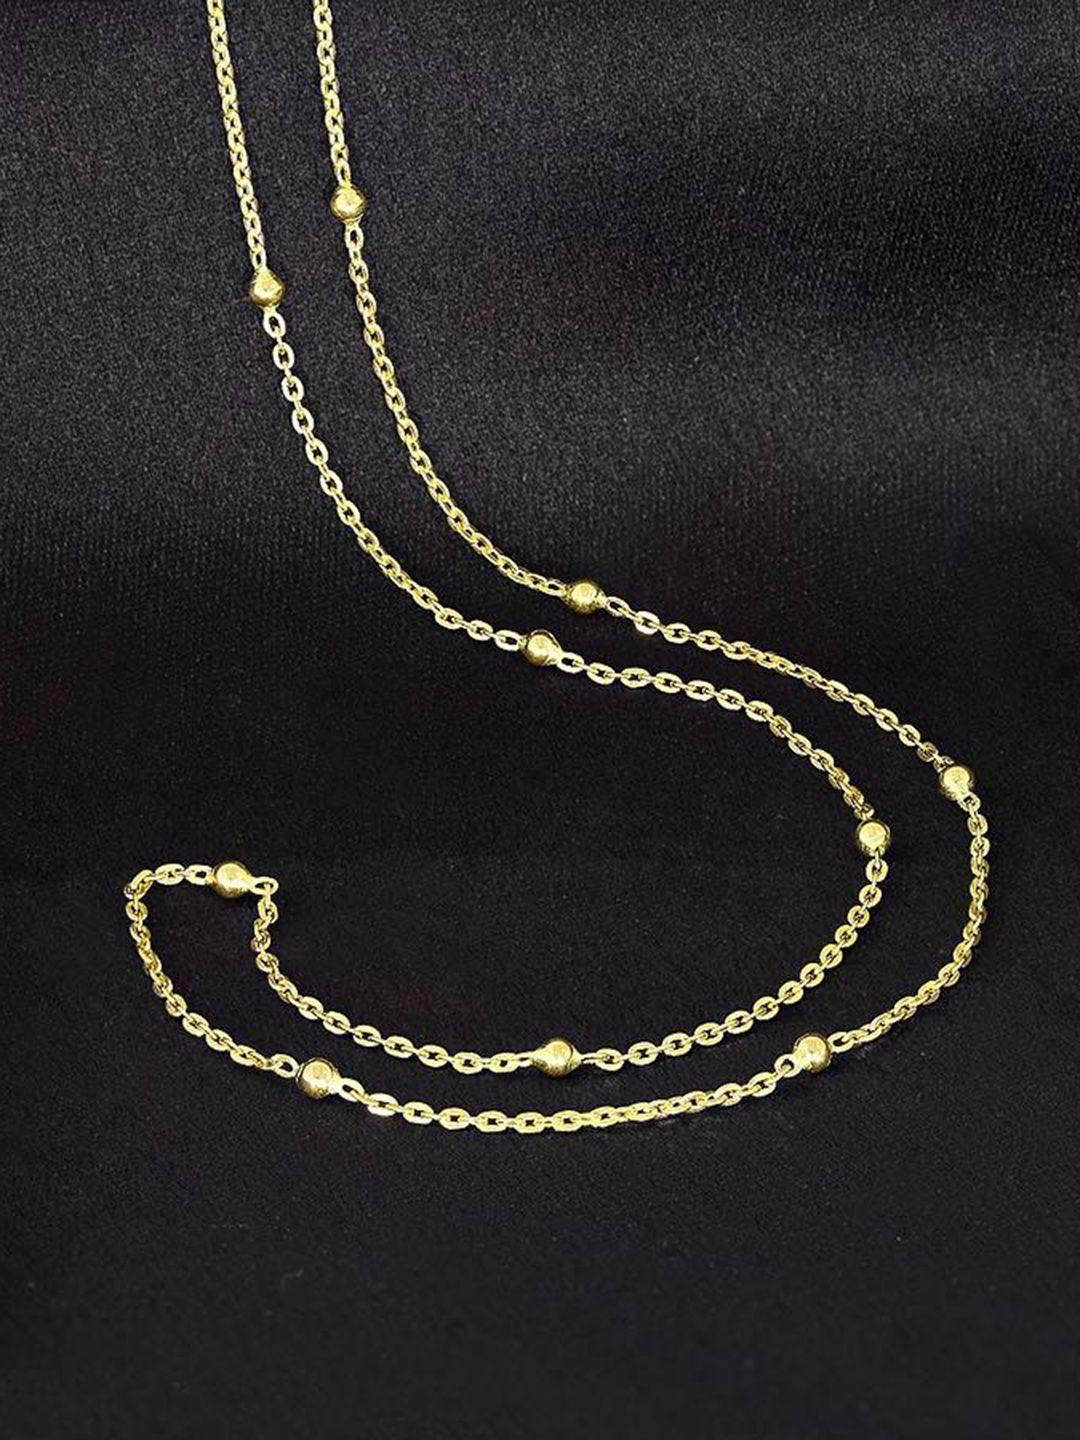 candere a kalyan jewellers company 22kt bis hallmark gold chain-3.44gm